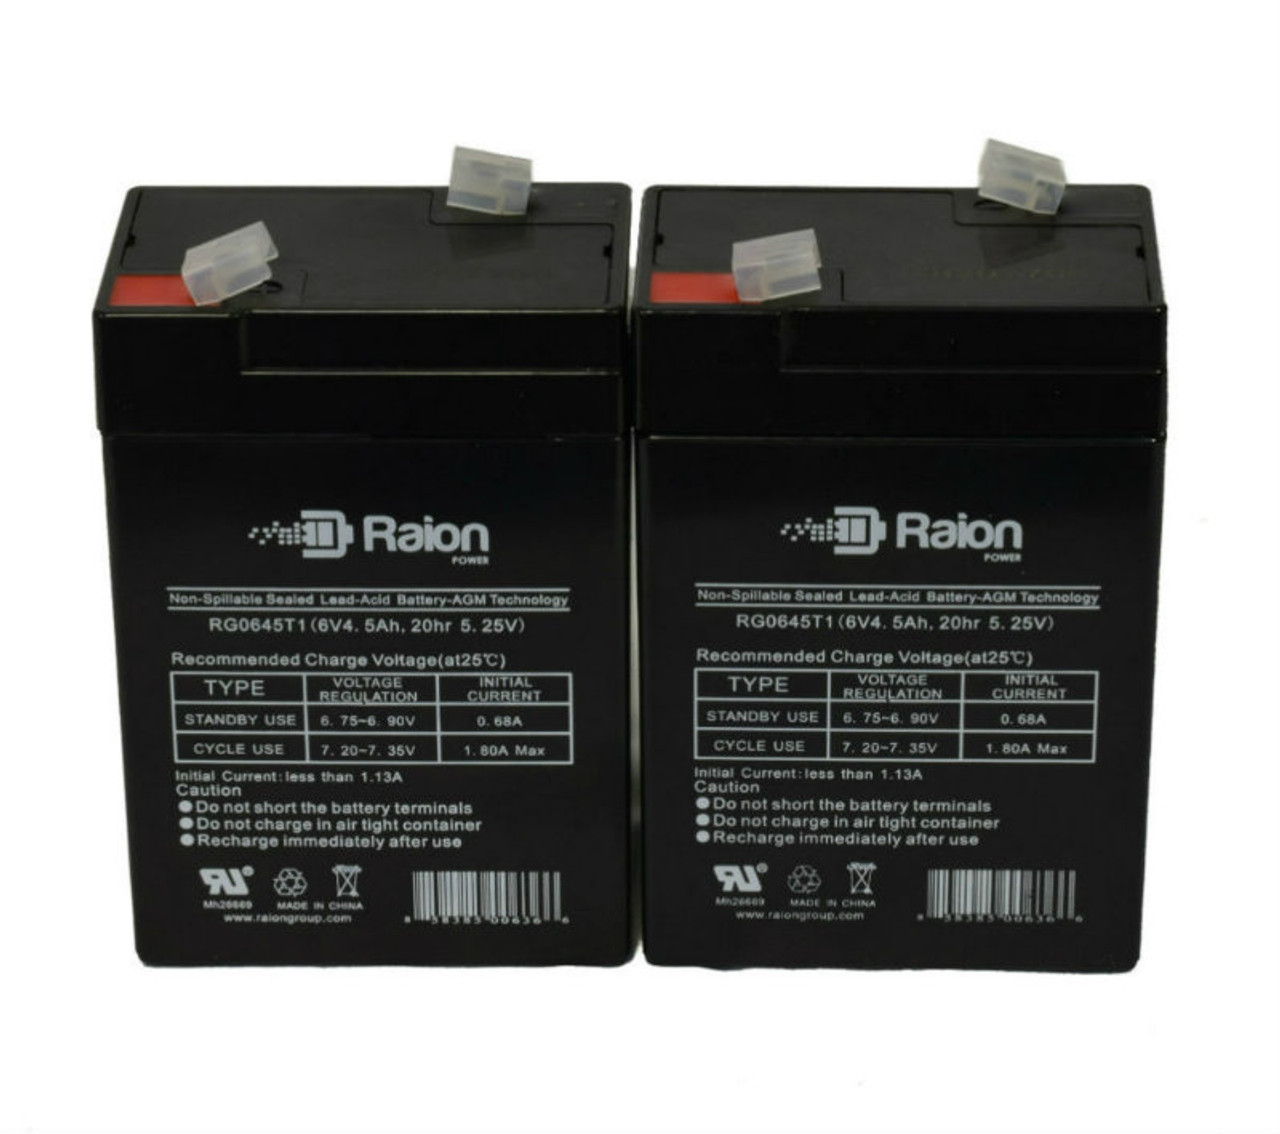 Raion Power 6 Volt 4.5Ah RG0645T1 Replacement Spotlight Battery for Cyclops Spotlight No. 158612 15 Million - 2 Pack